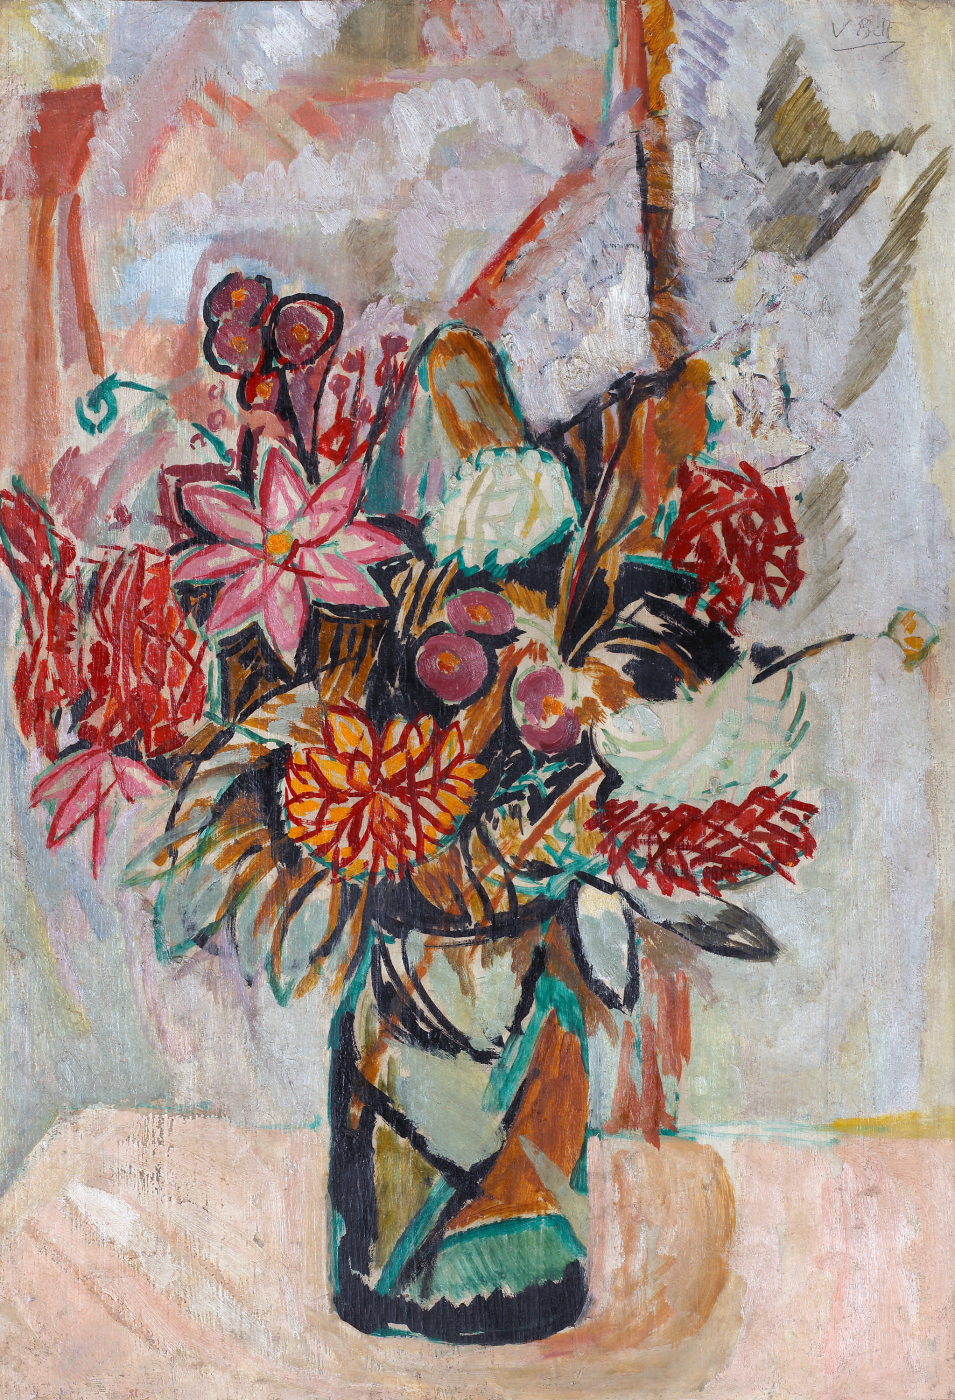 Still life of Dahlias by Modern British and Bloomsbury Group artist Vanessa Bell